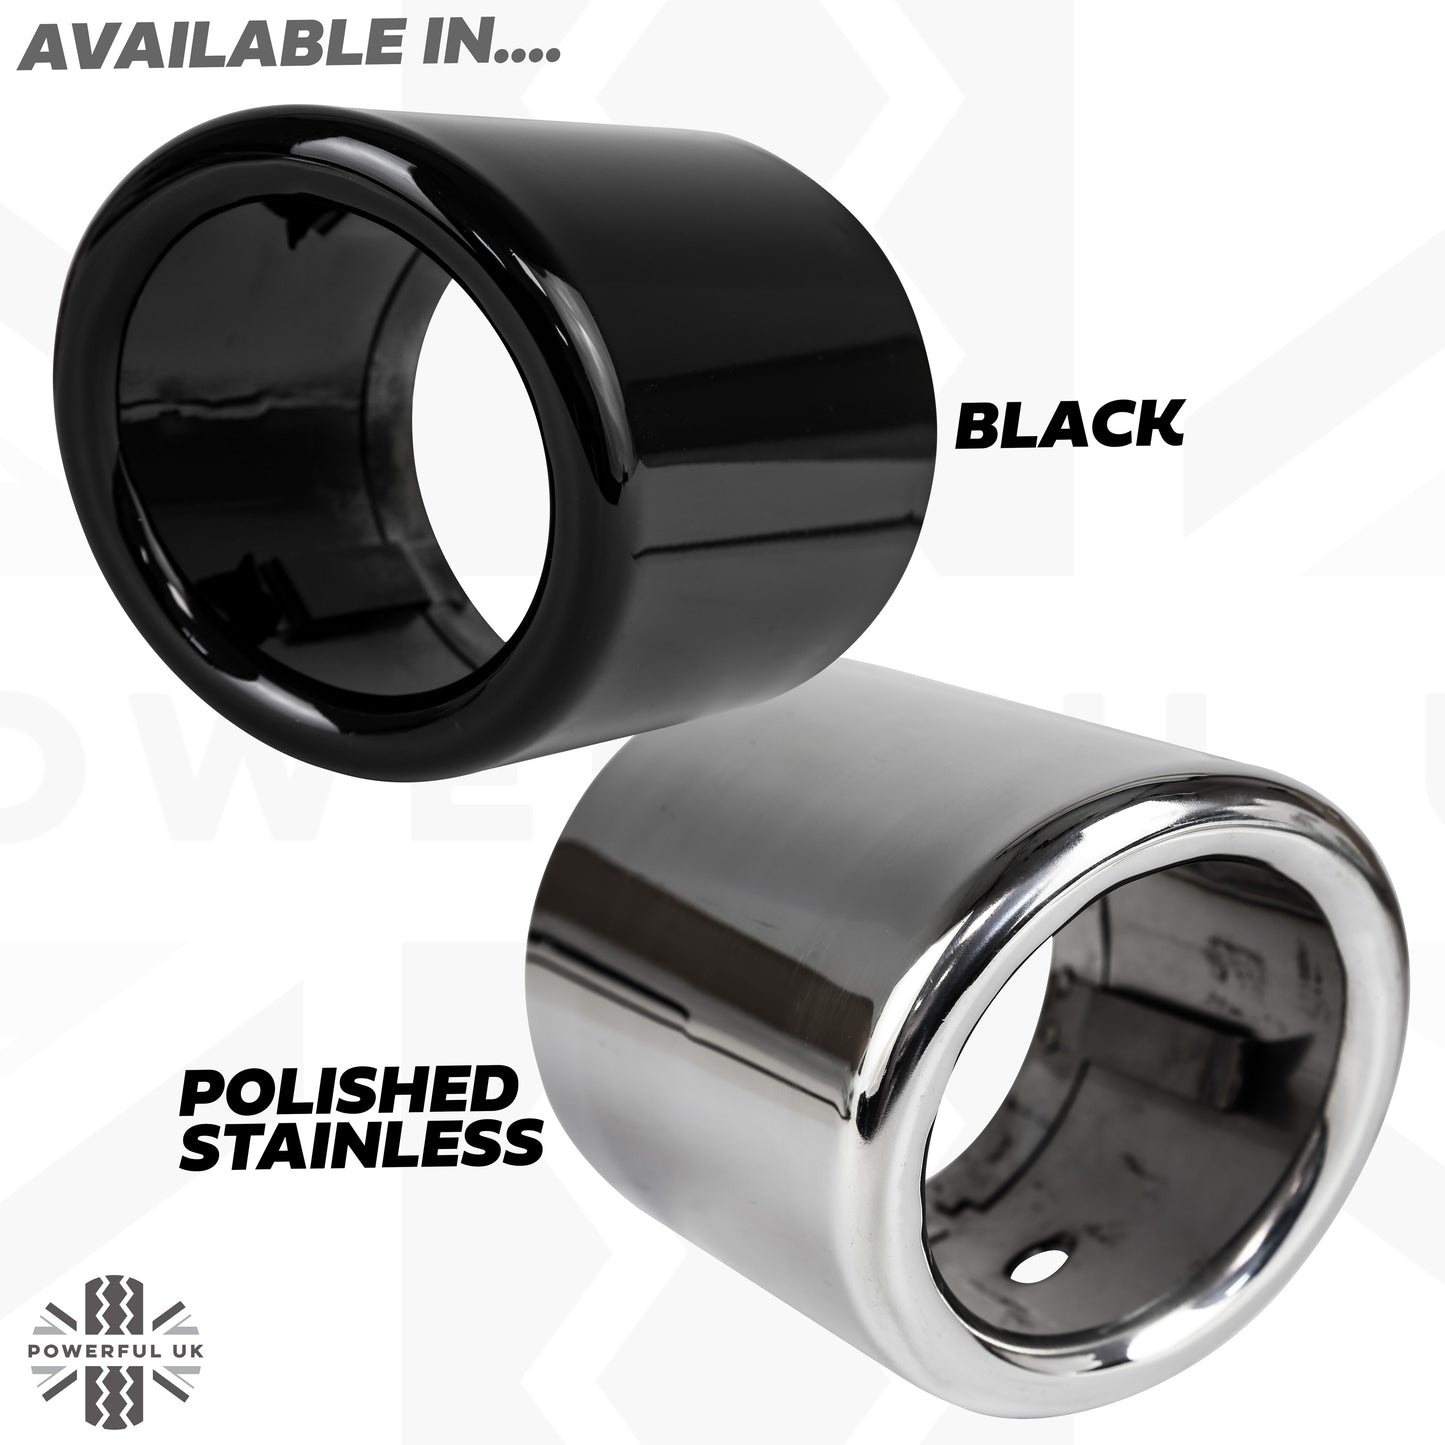 Round Exhaust Tips - Pair - DIESEL - Gloss Black for Range Rover Sport L494 (2014-17)